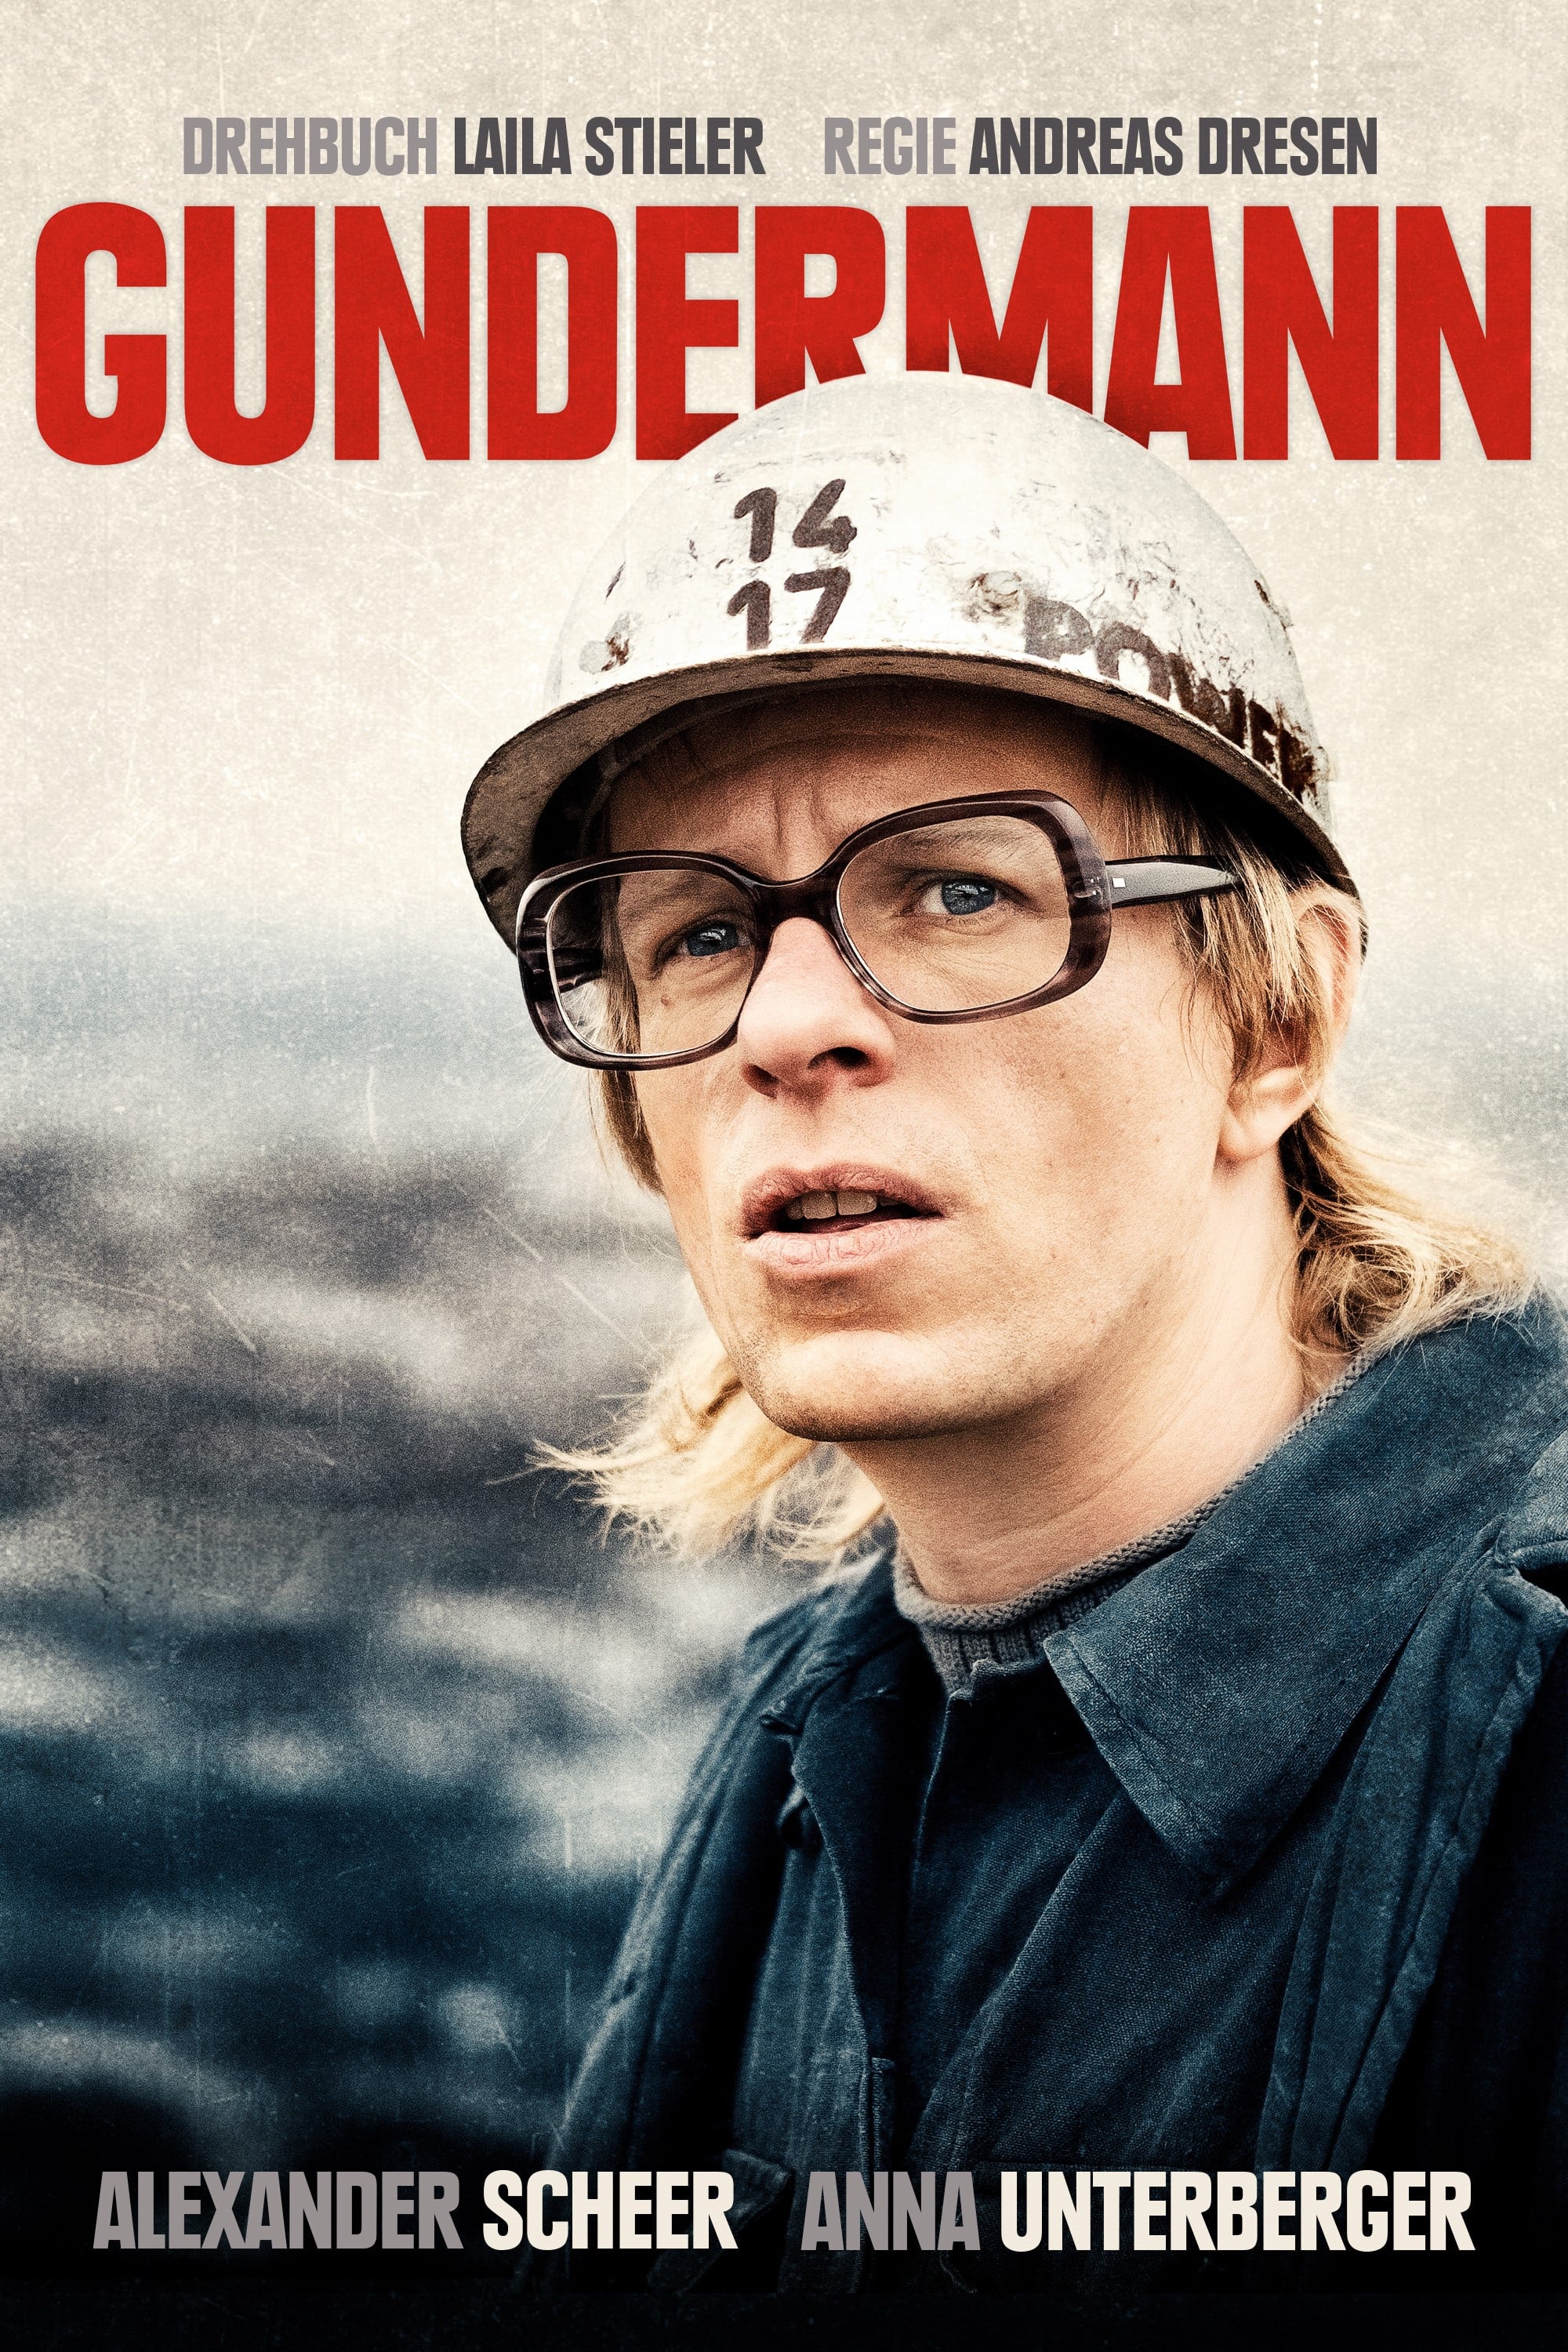 Gundermann (2018)